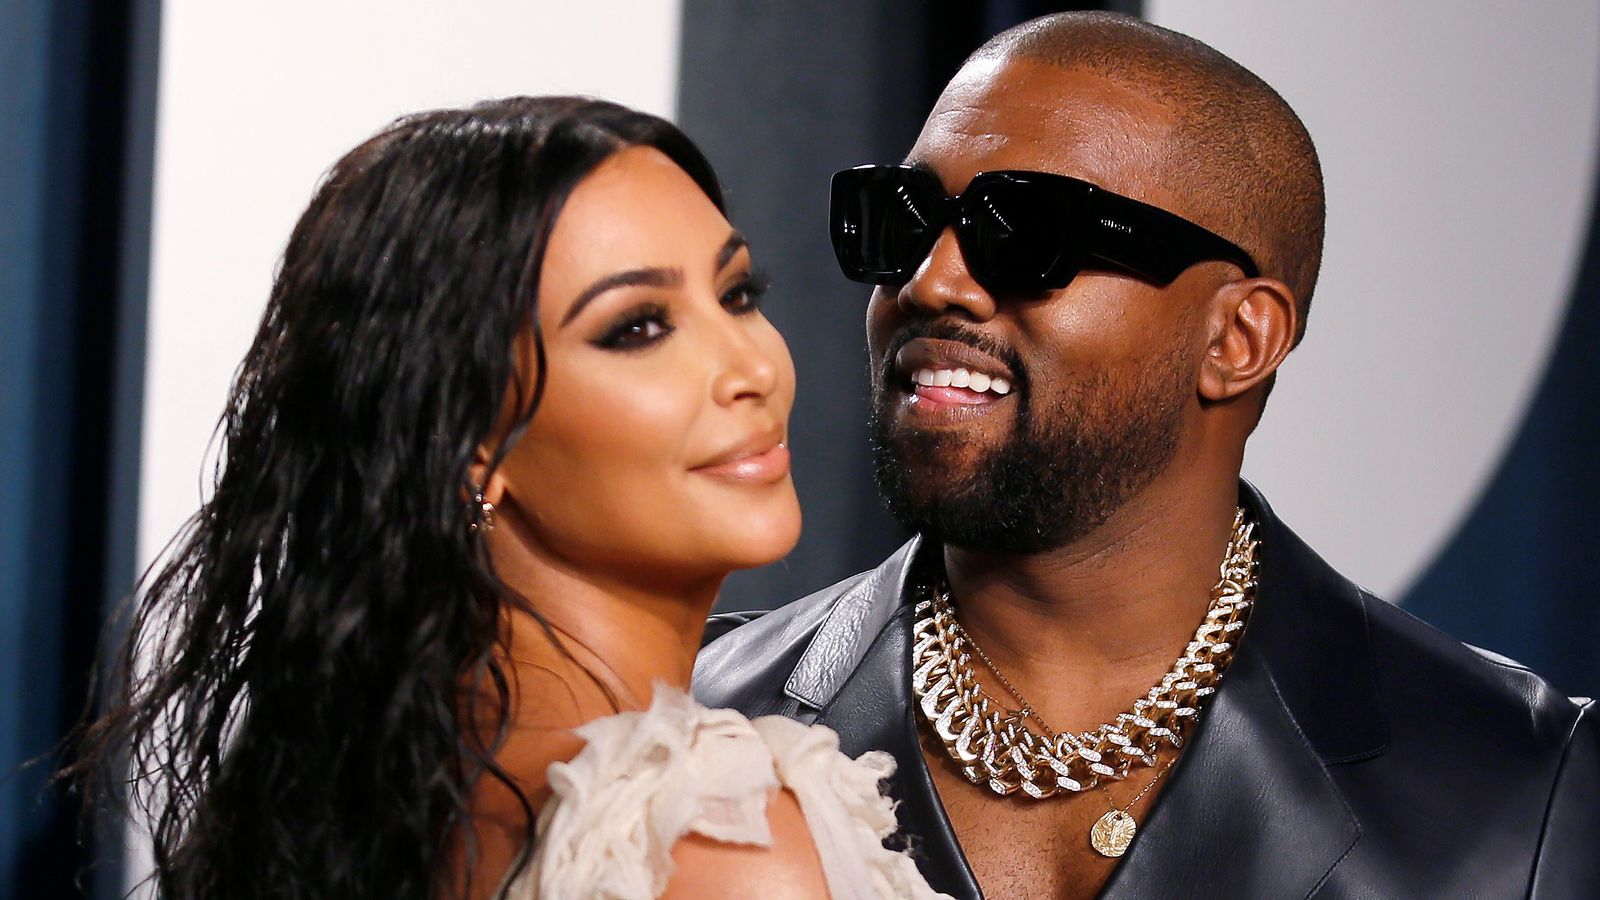 Kim Kardashian calls Kanye West's social media attacks 'hurtful' after rapper questioned daughter's TikTok use